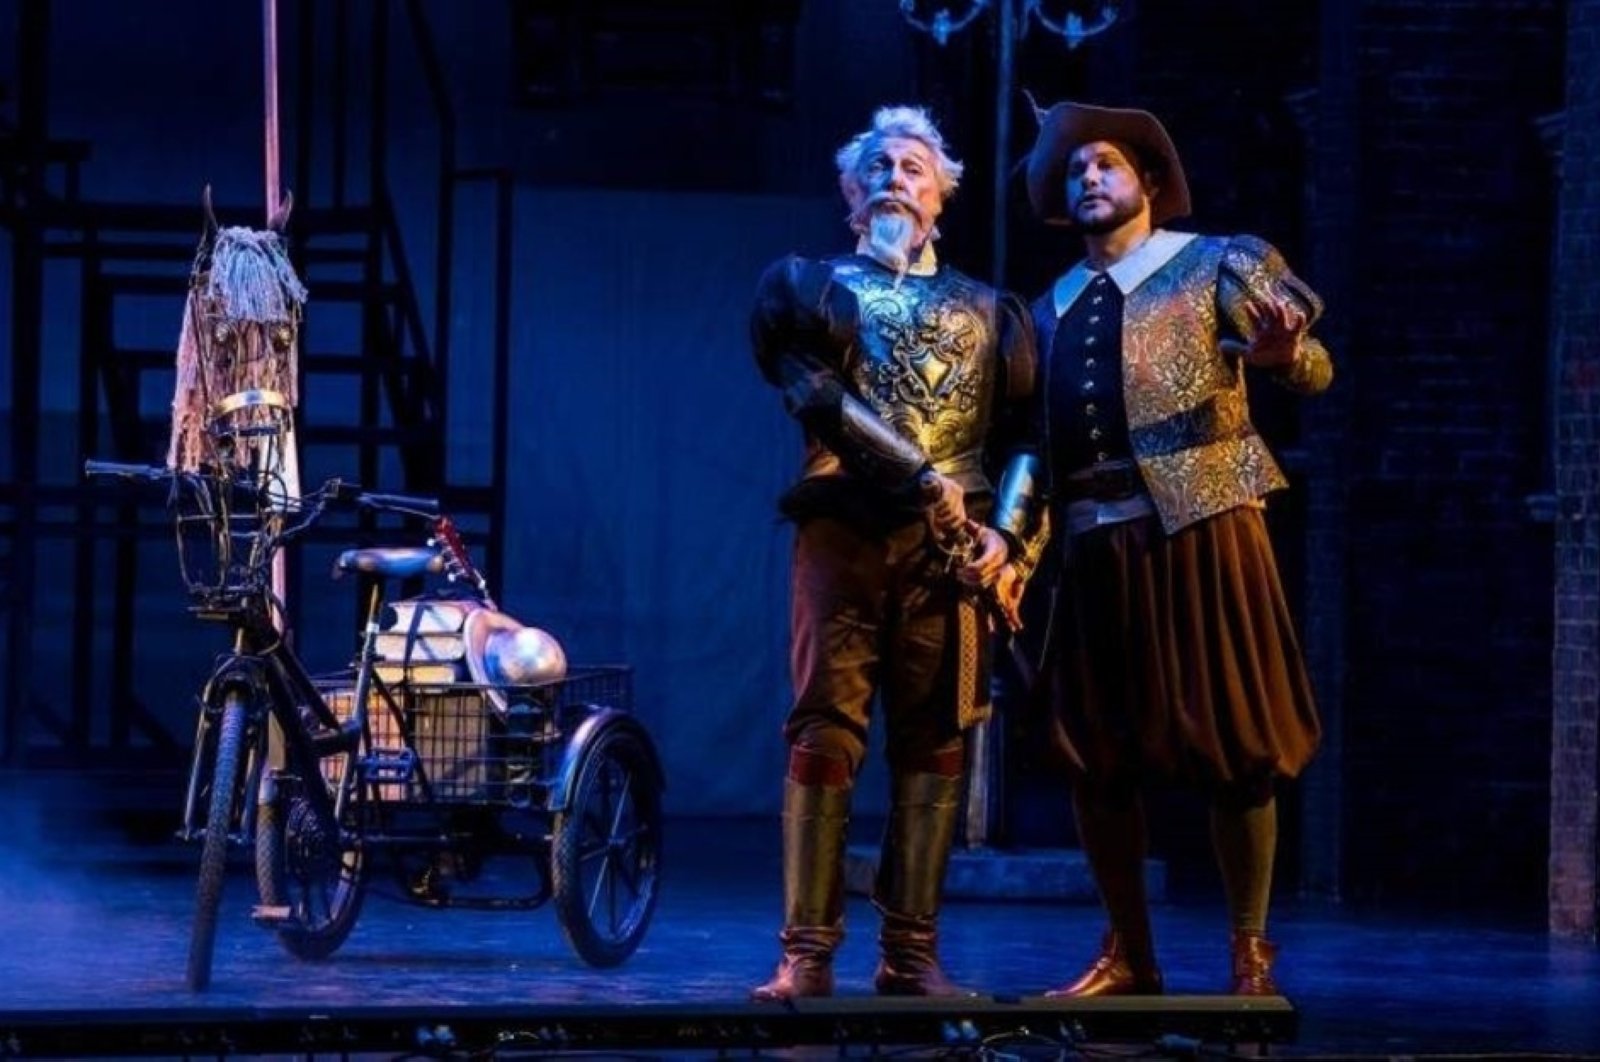 Opera dan Balet Negara Istanbul membawa ‘Don Quixote’ ke panggung